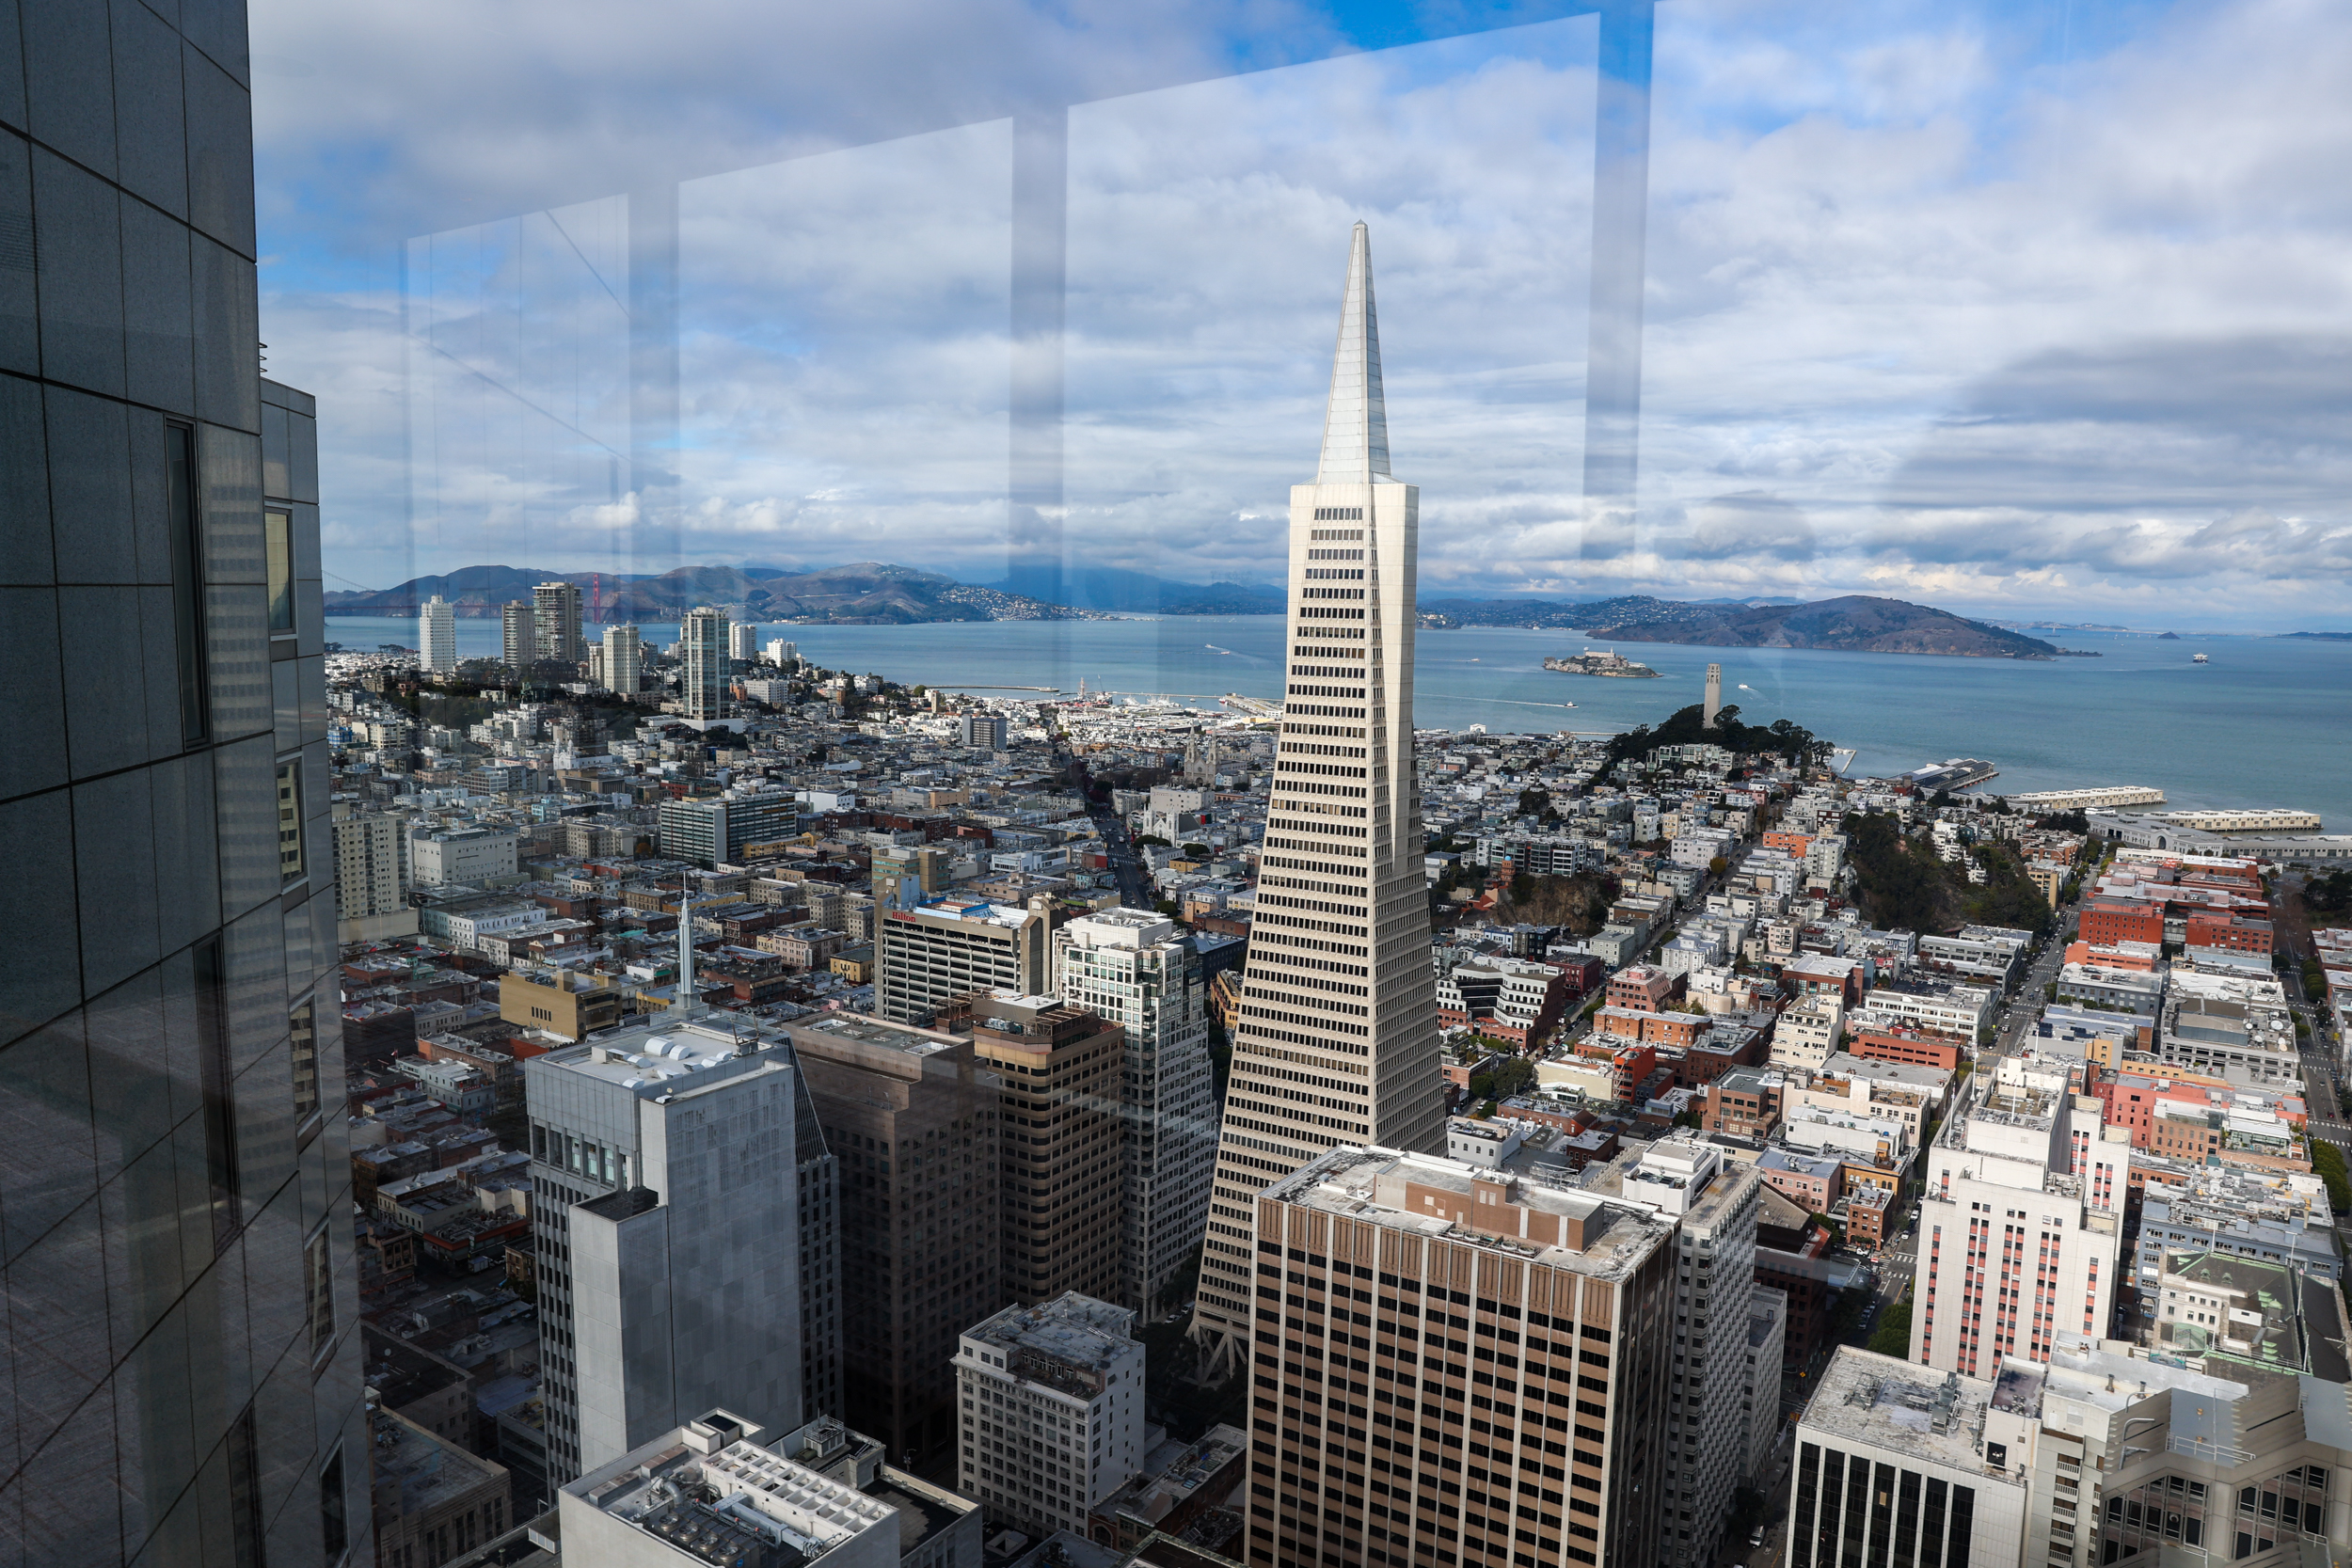 Transamerica Pyramid at 50: San Francisco icon enters a new era with $400M redevelopment